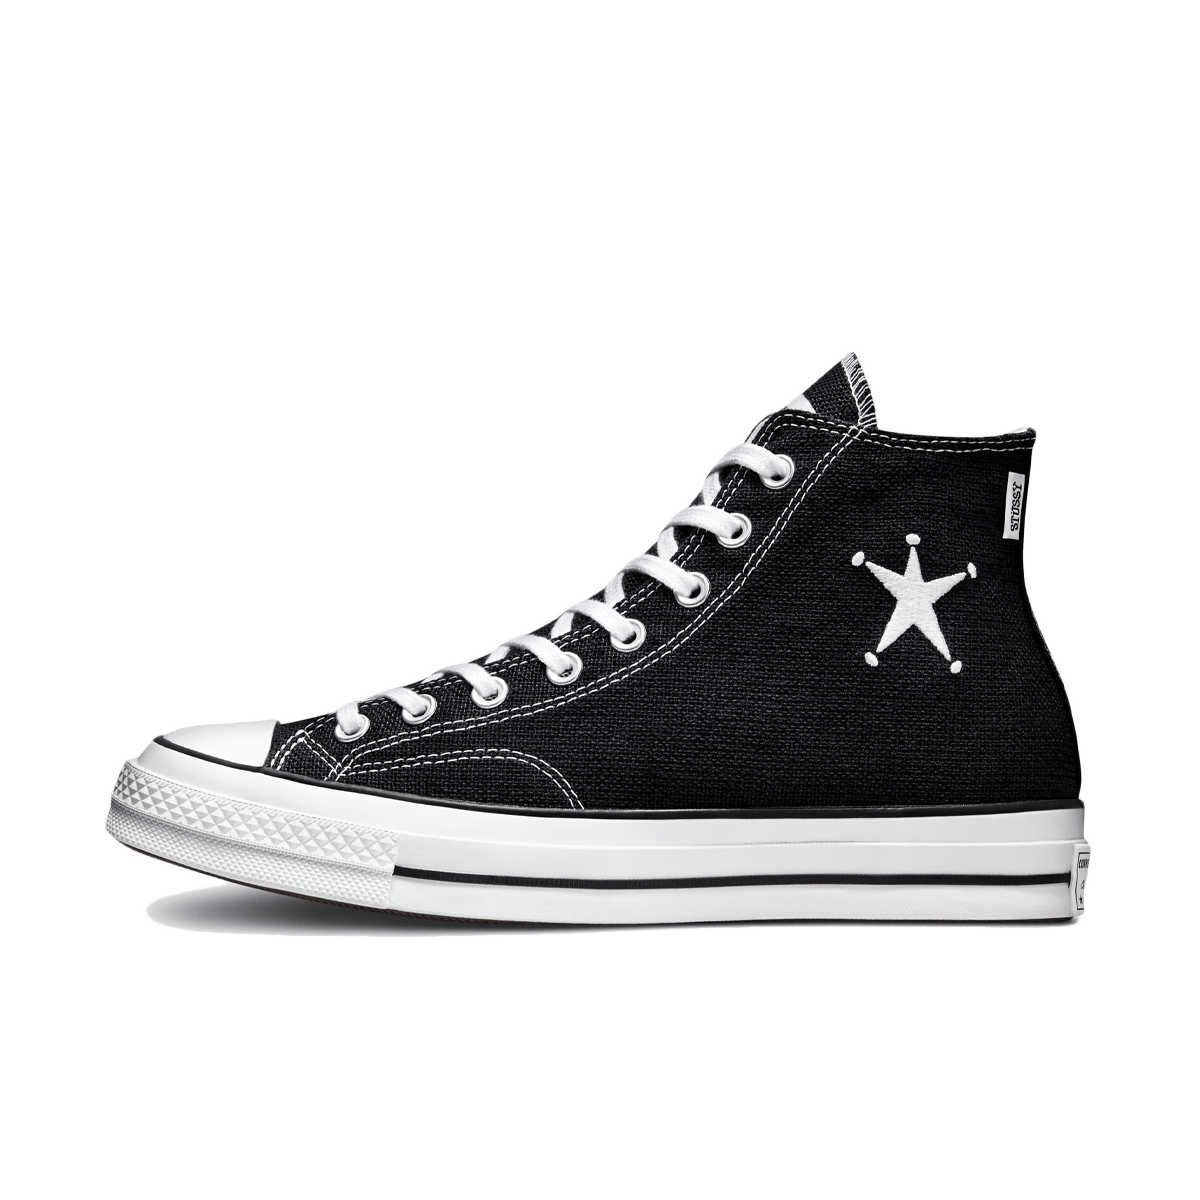 Stussy x Converse Chuck 70 'Black' A01765C